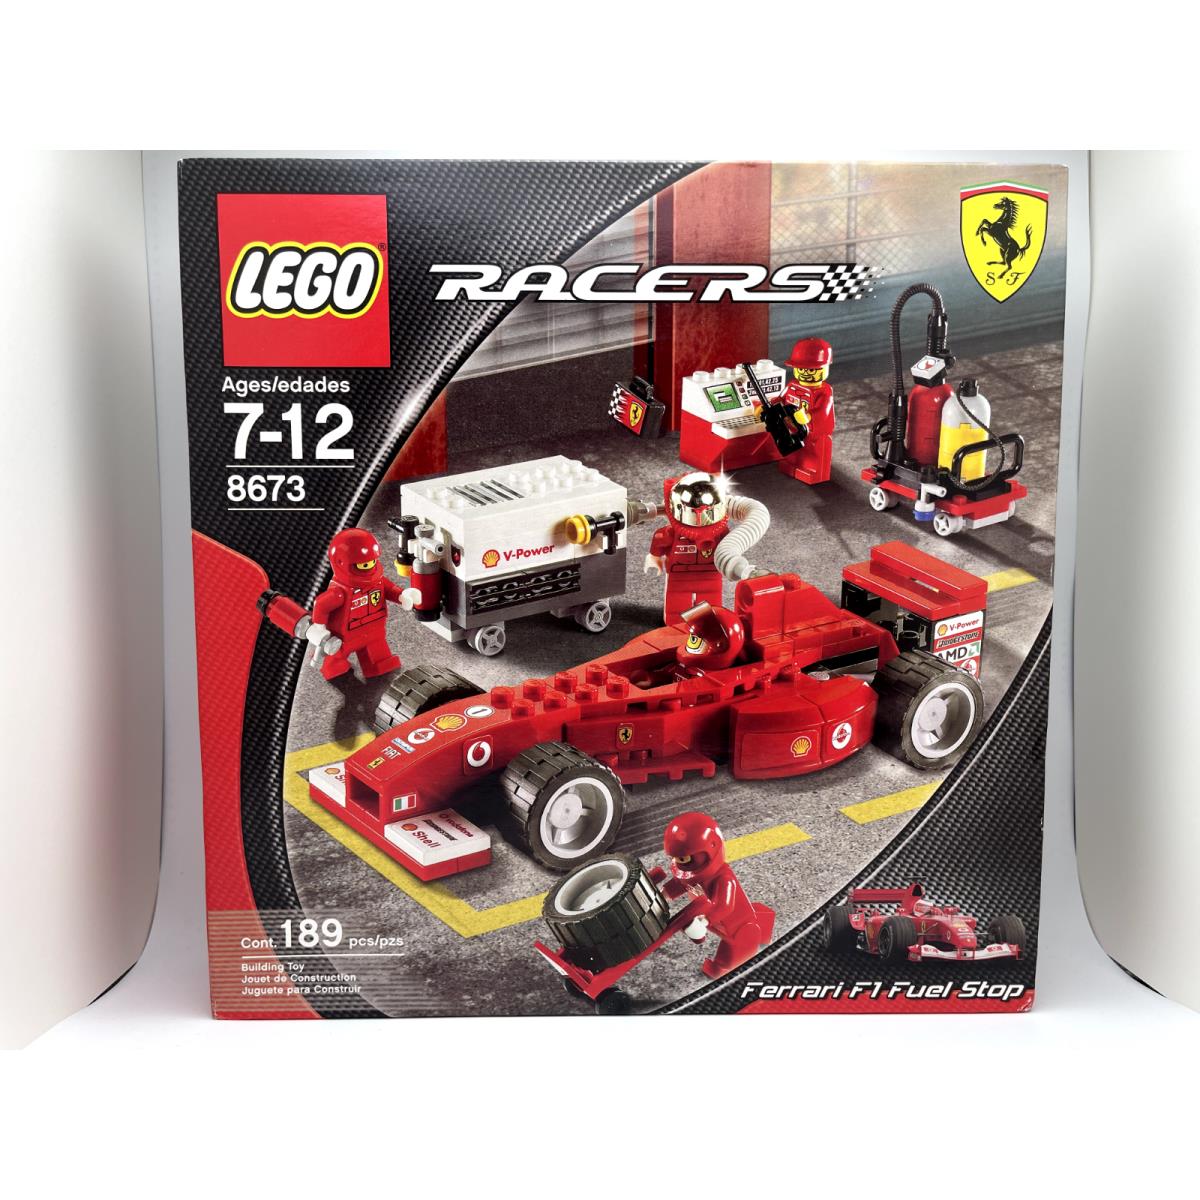 Lego 8673 Racers Ferrari F1 Fuel Stop Set From